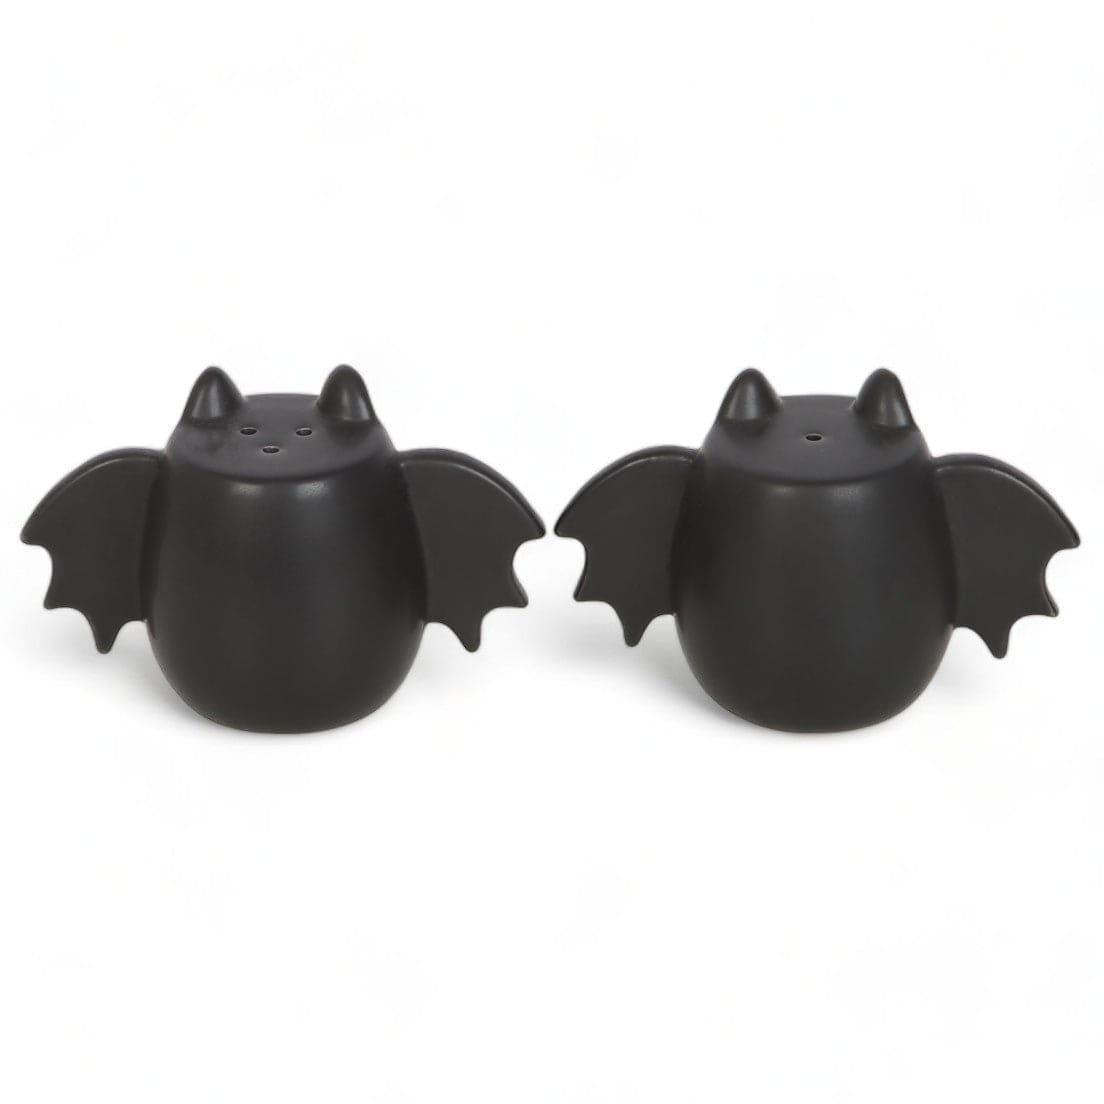 Bat Wing Salt and Pepper Shakers - Cruet Sets by Spirit of equinox